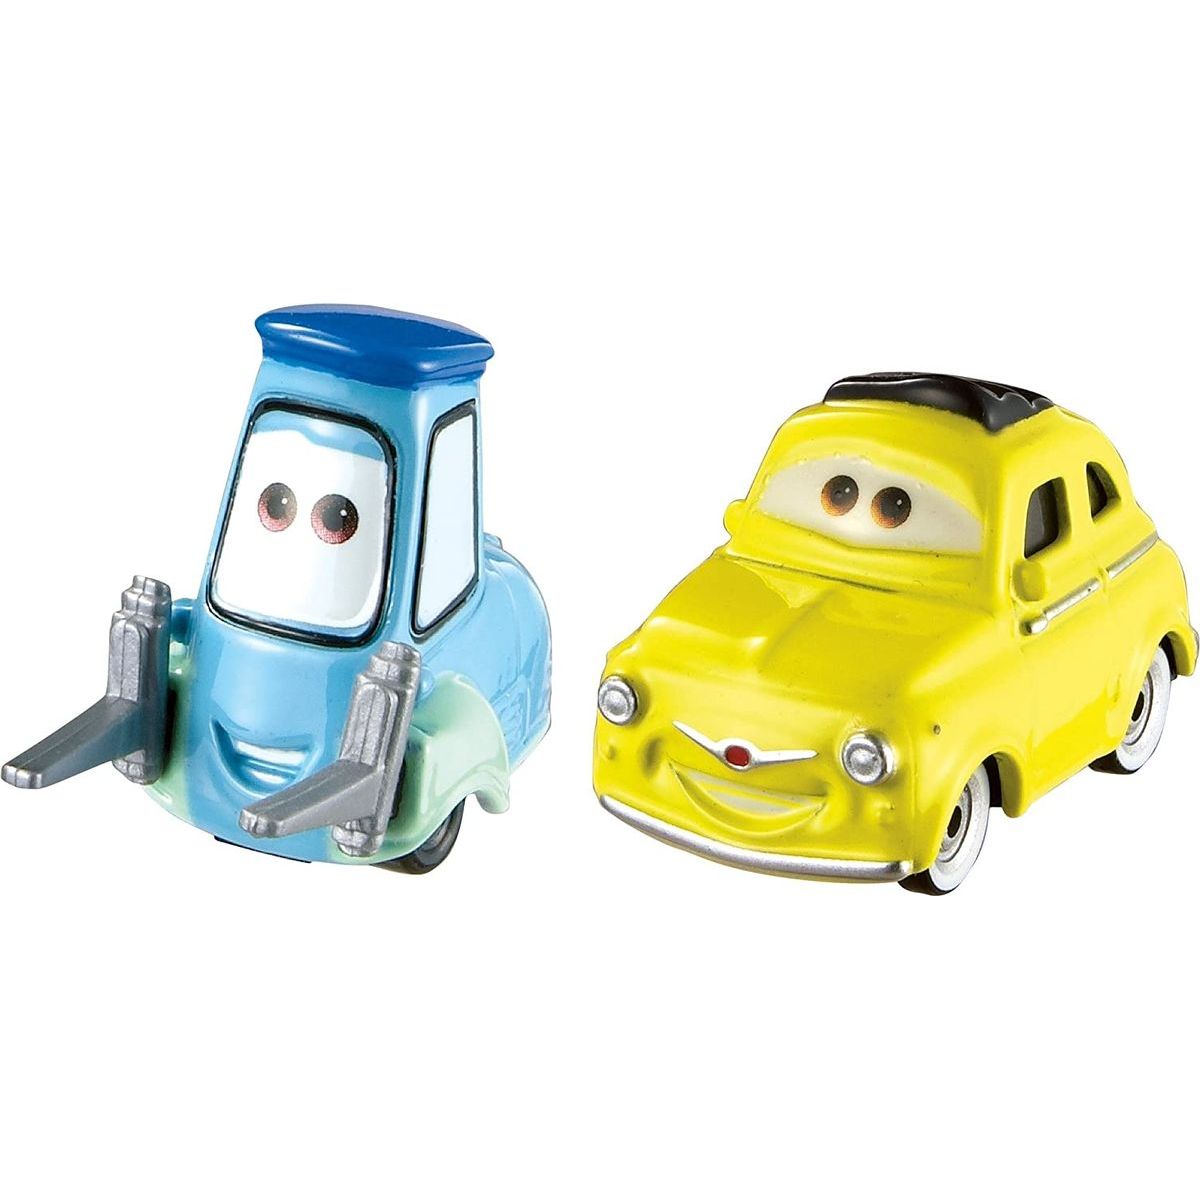 Mattel Disney Cars auto single Luigi and Guido